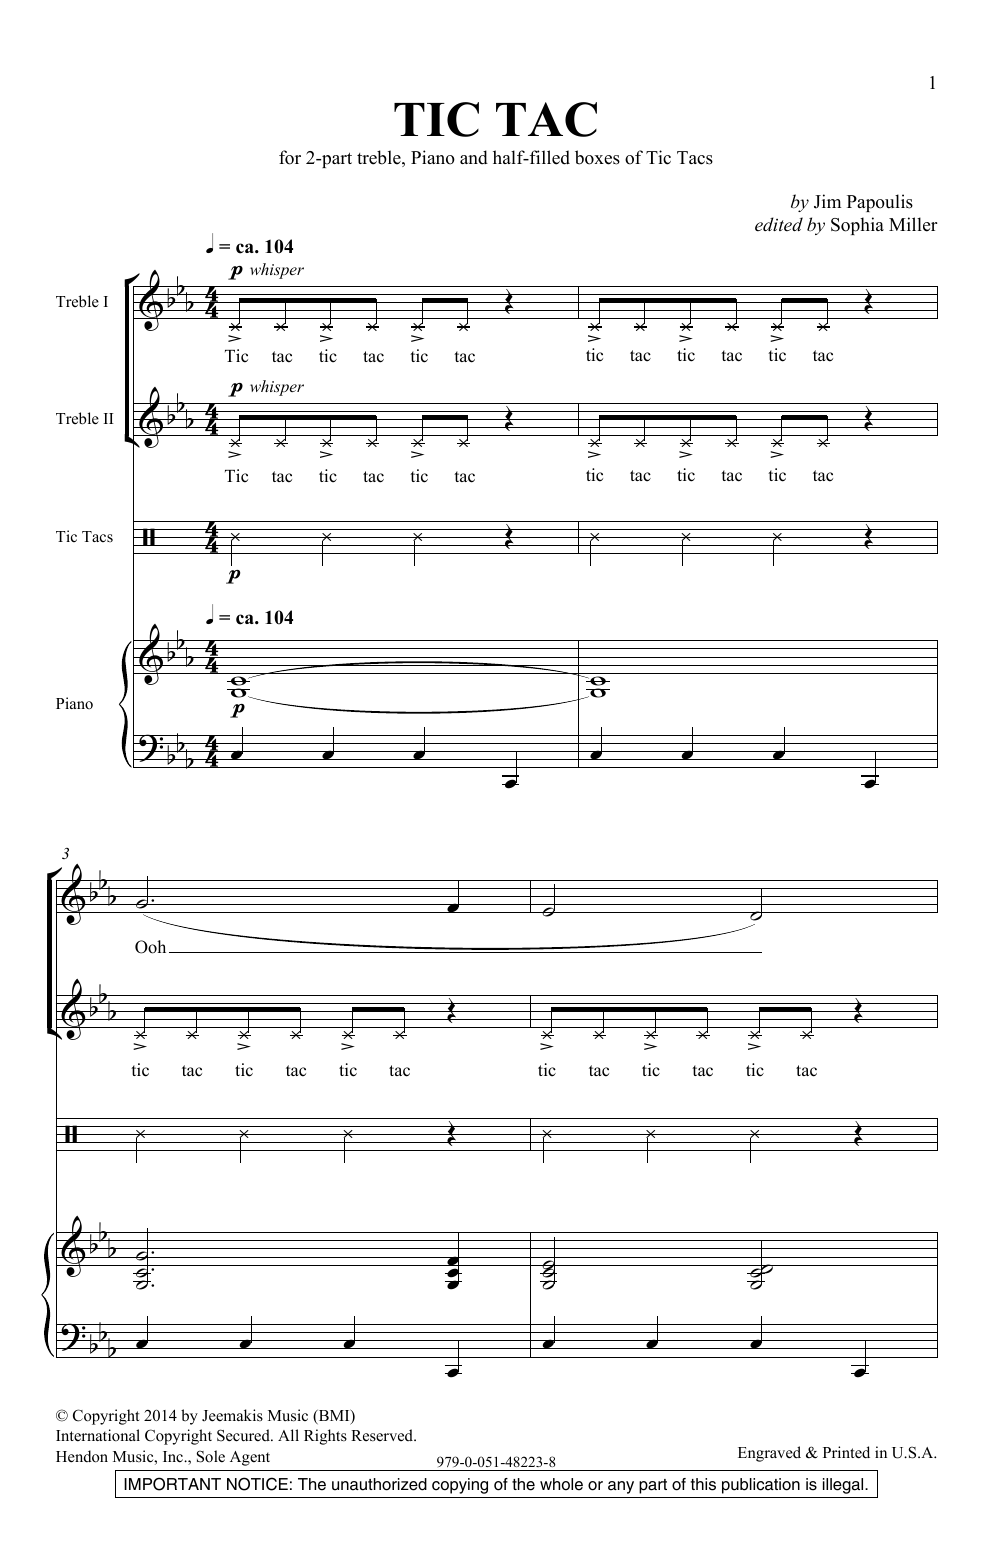 Jim Papoulis Tic Tac Sheet Music Notes & Chords for Unison Choir - Download or Print PDF